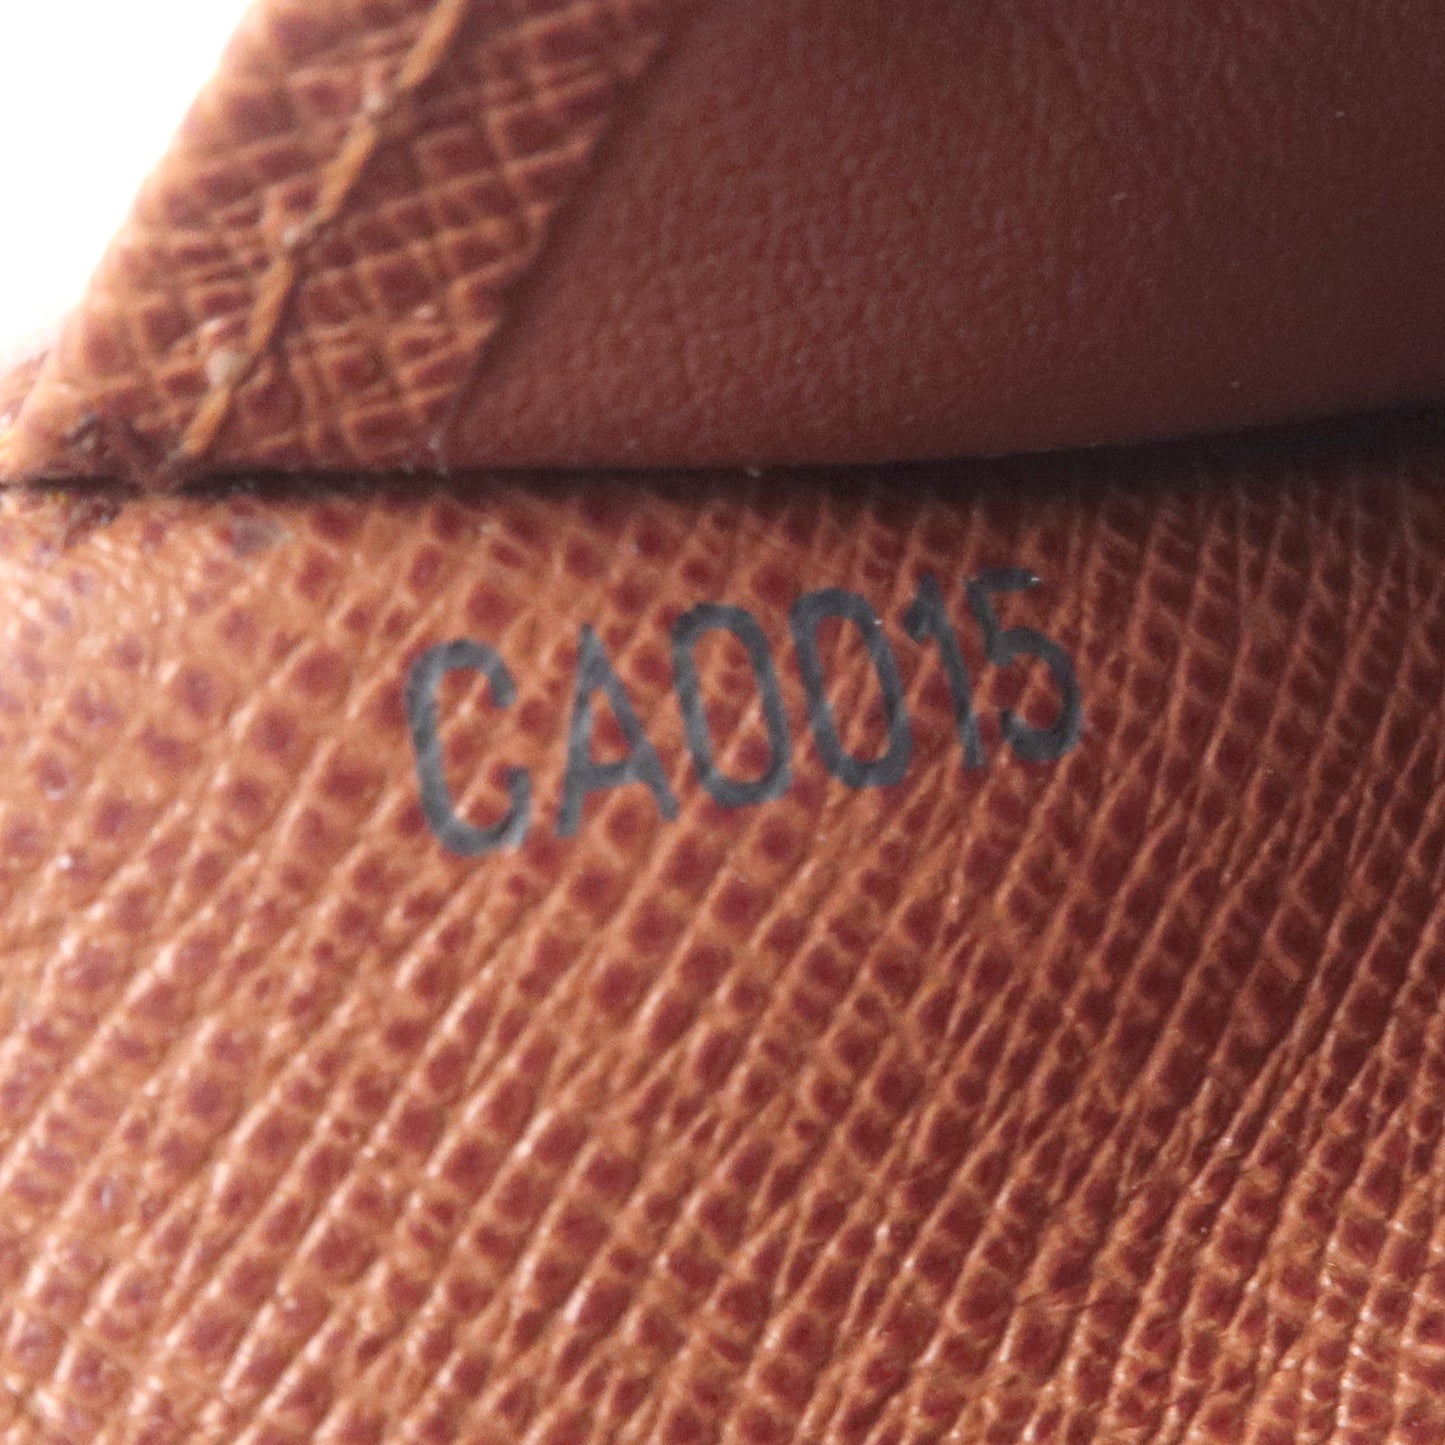 Louis-Vuitton-Monogram-Agenda-PM-Planner-Cover-Brown-R20005 – dct